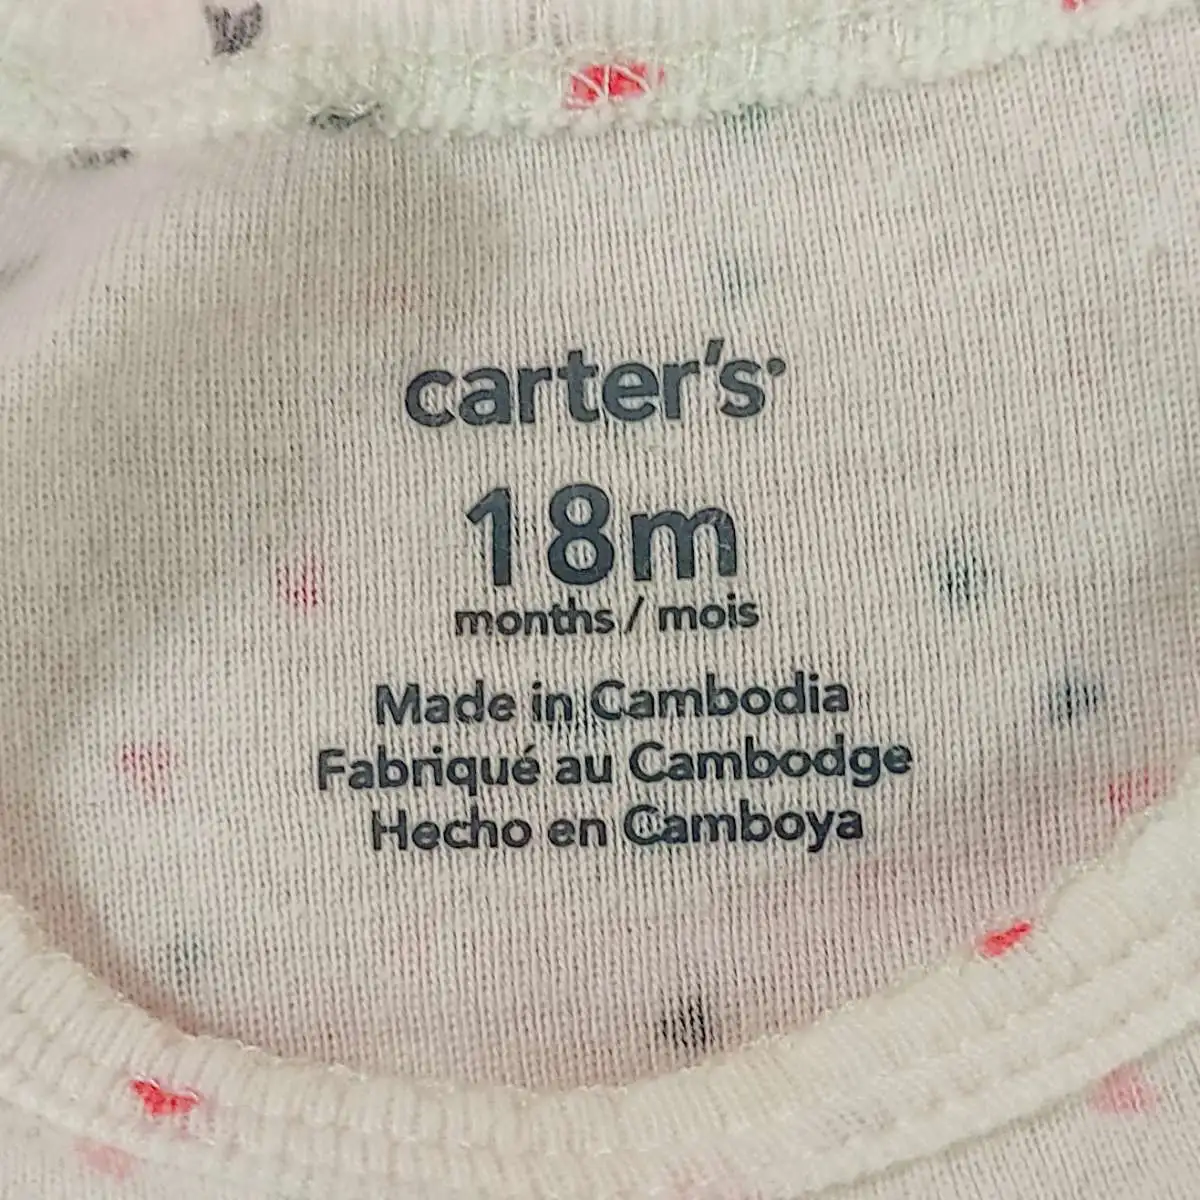 carter's ชุดหมีแขนสั้นขาเว้าสีขาวลายหัวใจcarter's ชุดหมีแขนสั้นขาเว้าสีเทาลายดอกสีขาวcarter's ชุดหมีแขนสั้นขาเว้าสีชมพู 